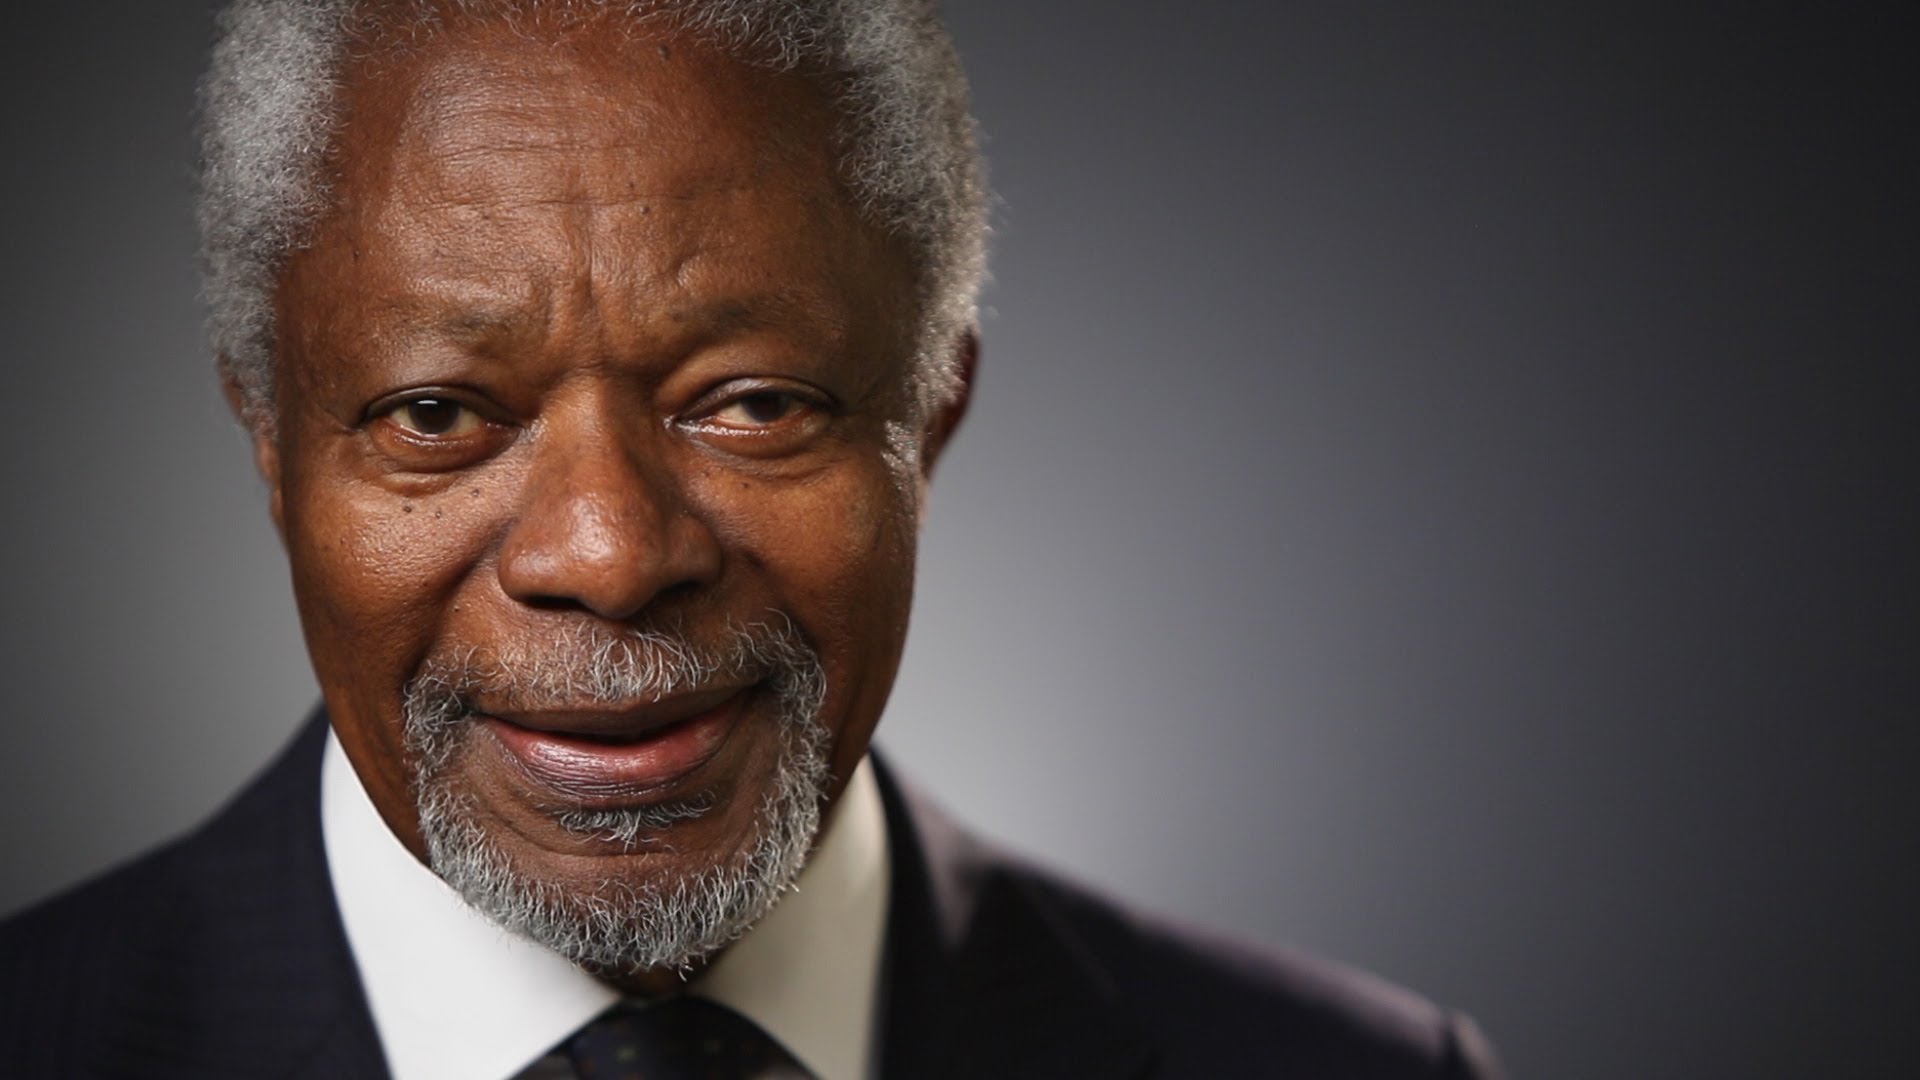 Concede defeat – Kofi Annan tells losing party